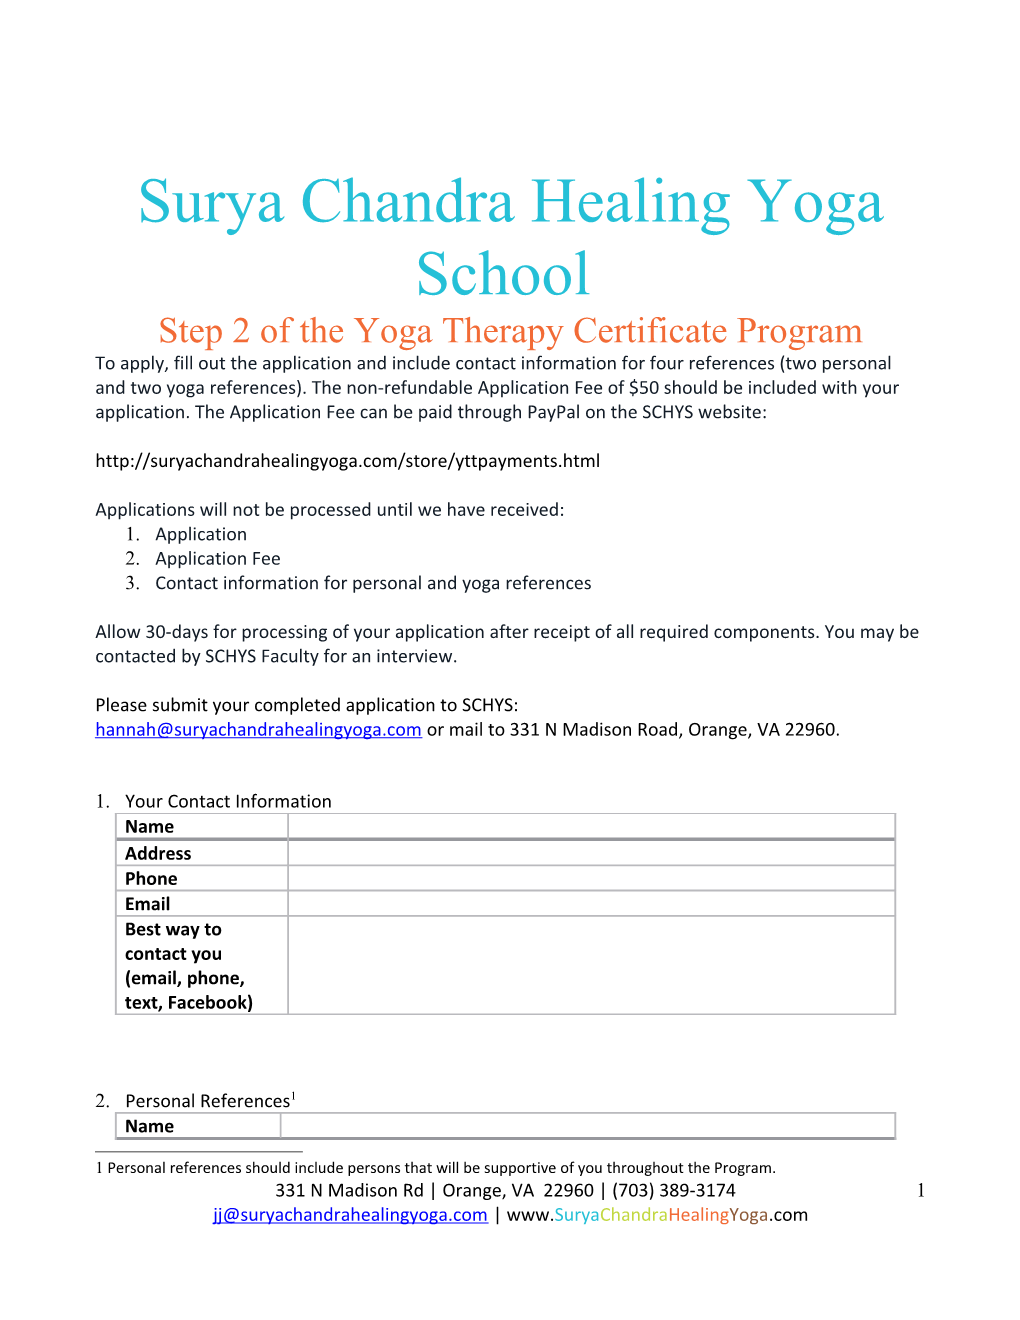 Surya Chandra Healing Yoga School